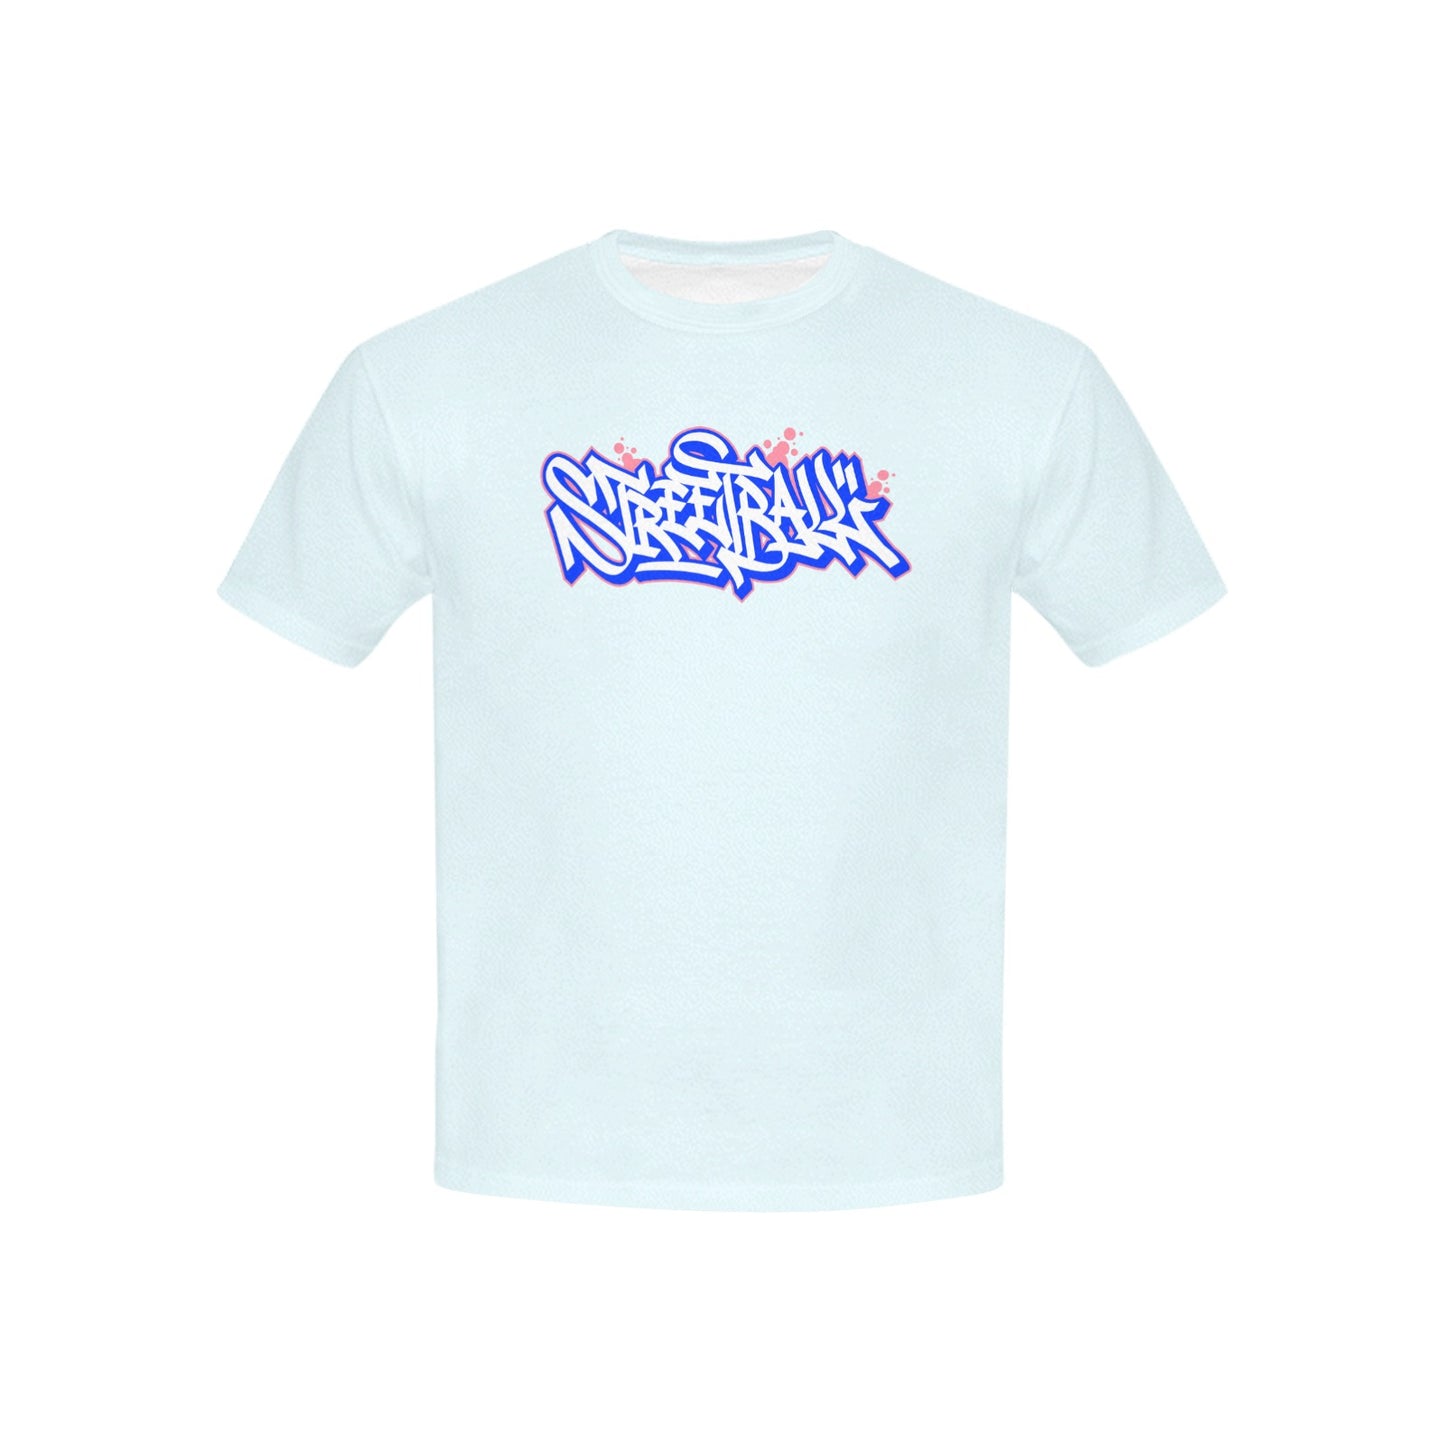 Duntalk "Streetball" Youth Basketball T-shirt - Blue